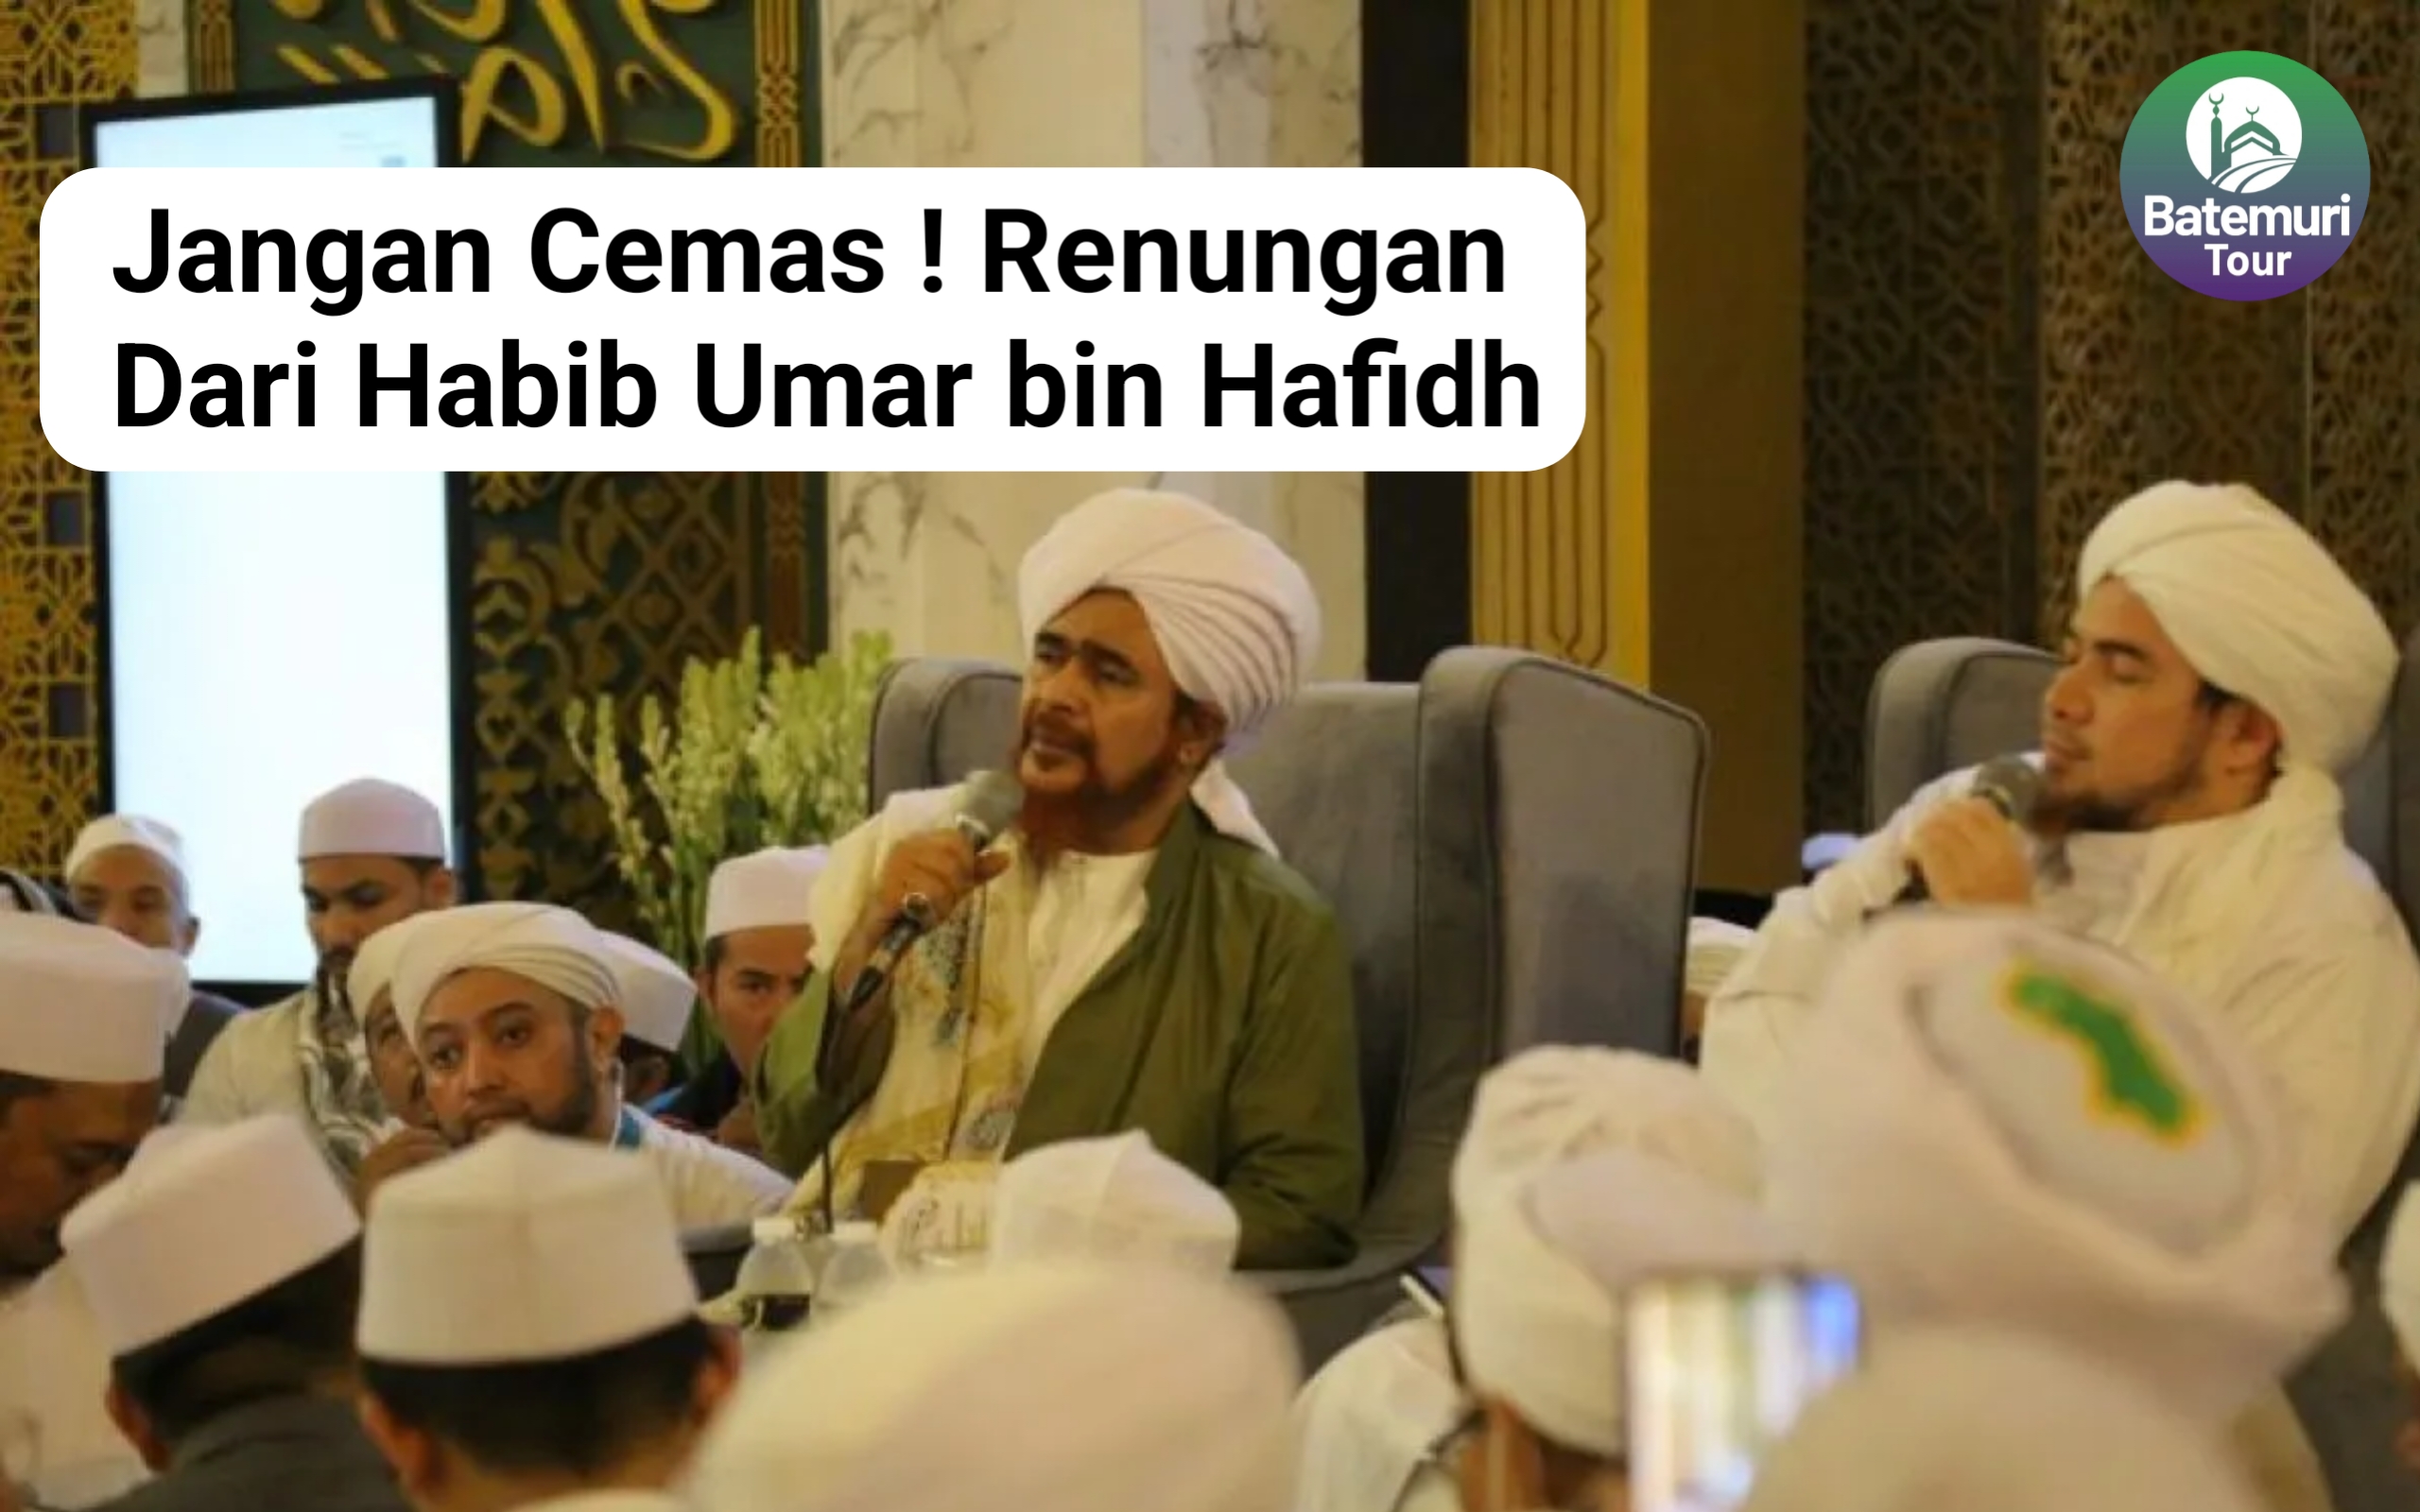 Jangan Cemas! Nasihat Diri Renungan Hati Habib Umar bin Hafidz